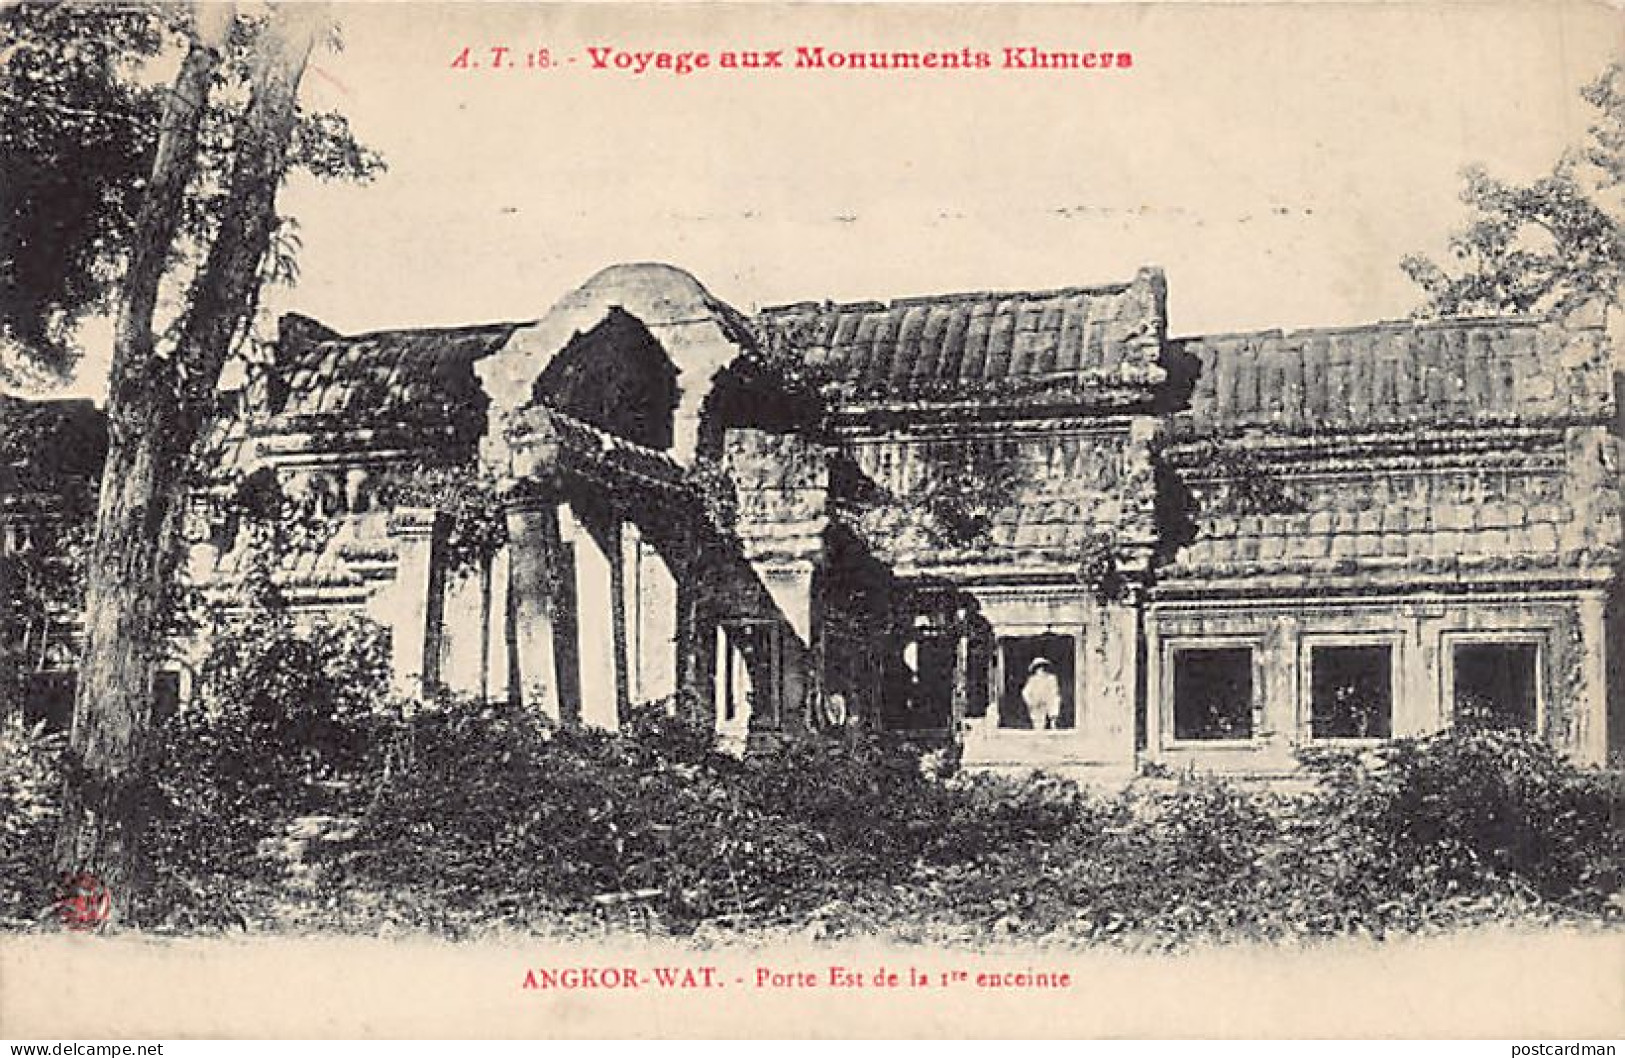 Cambodge - Voyage Aux Monuments Khmers - ANGKOR VAT - Porte Est - Ed. A. T. 18 - Cambodia